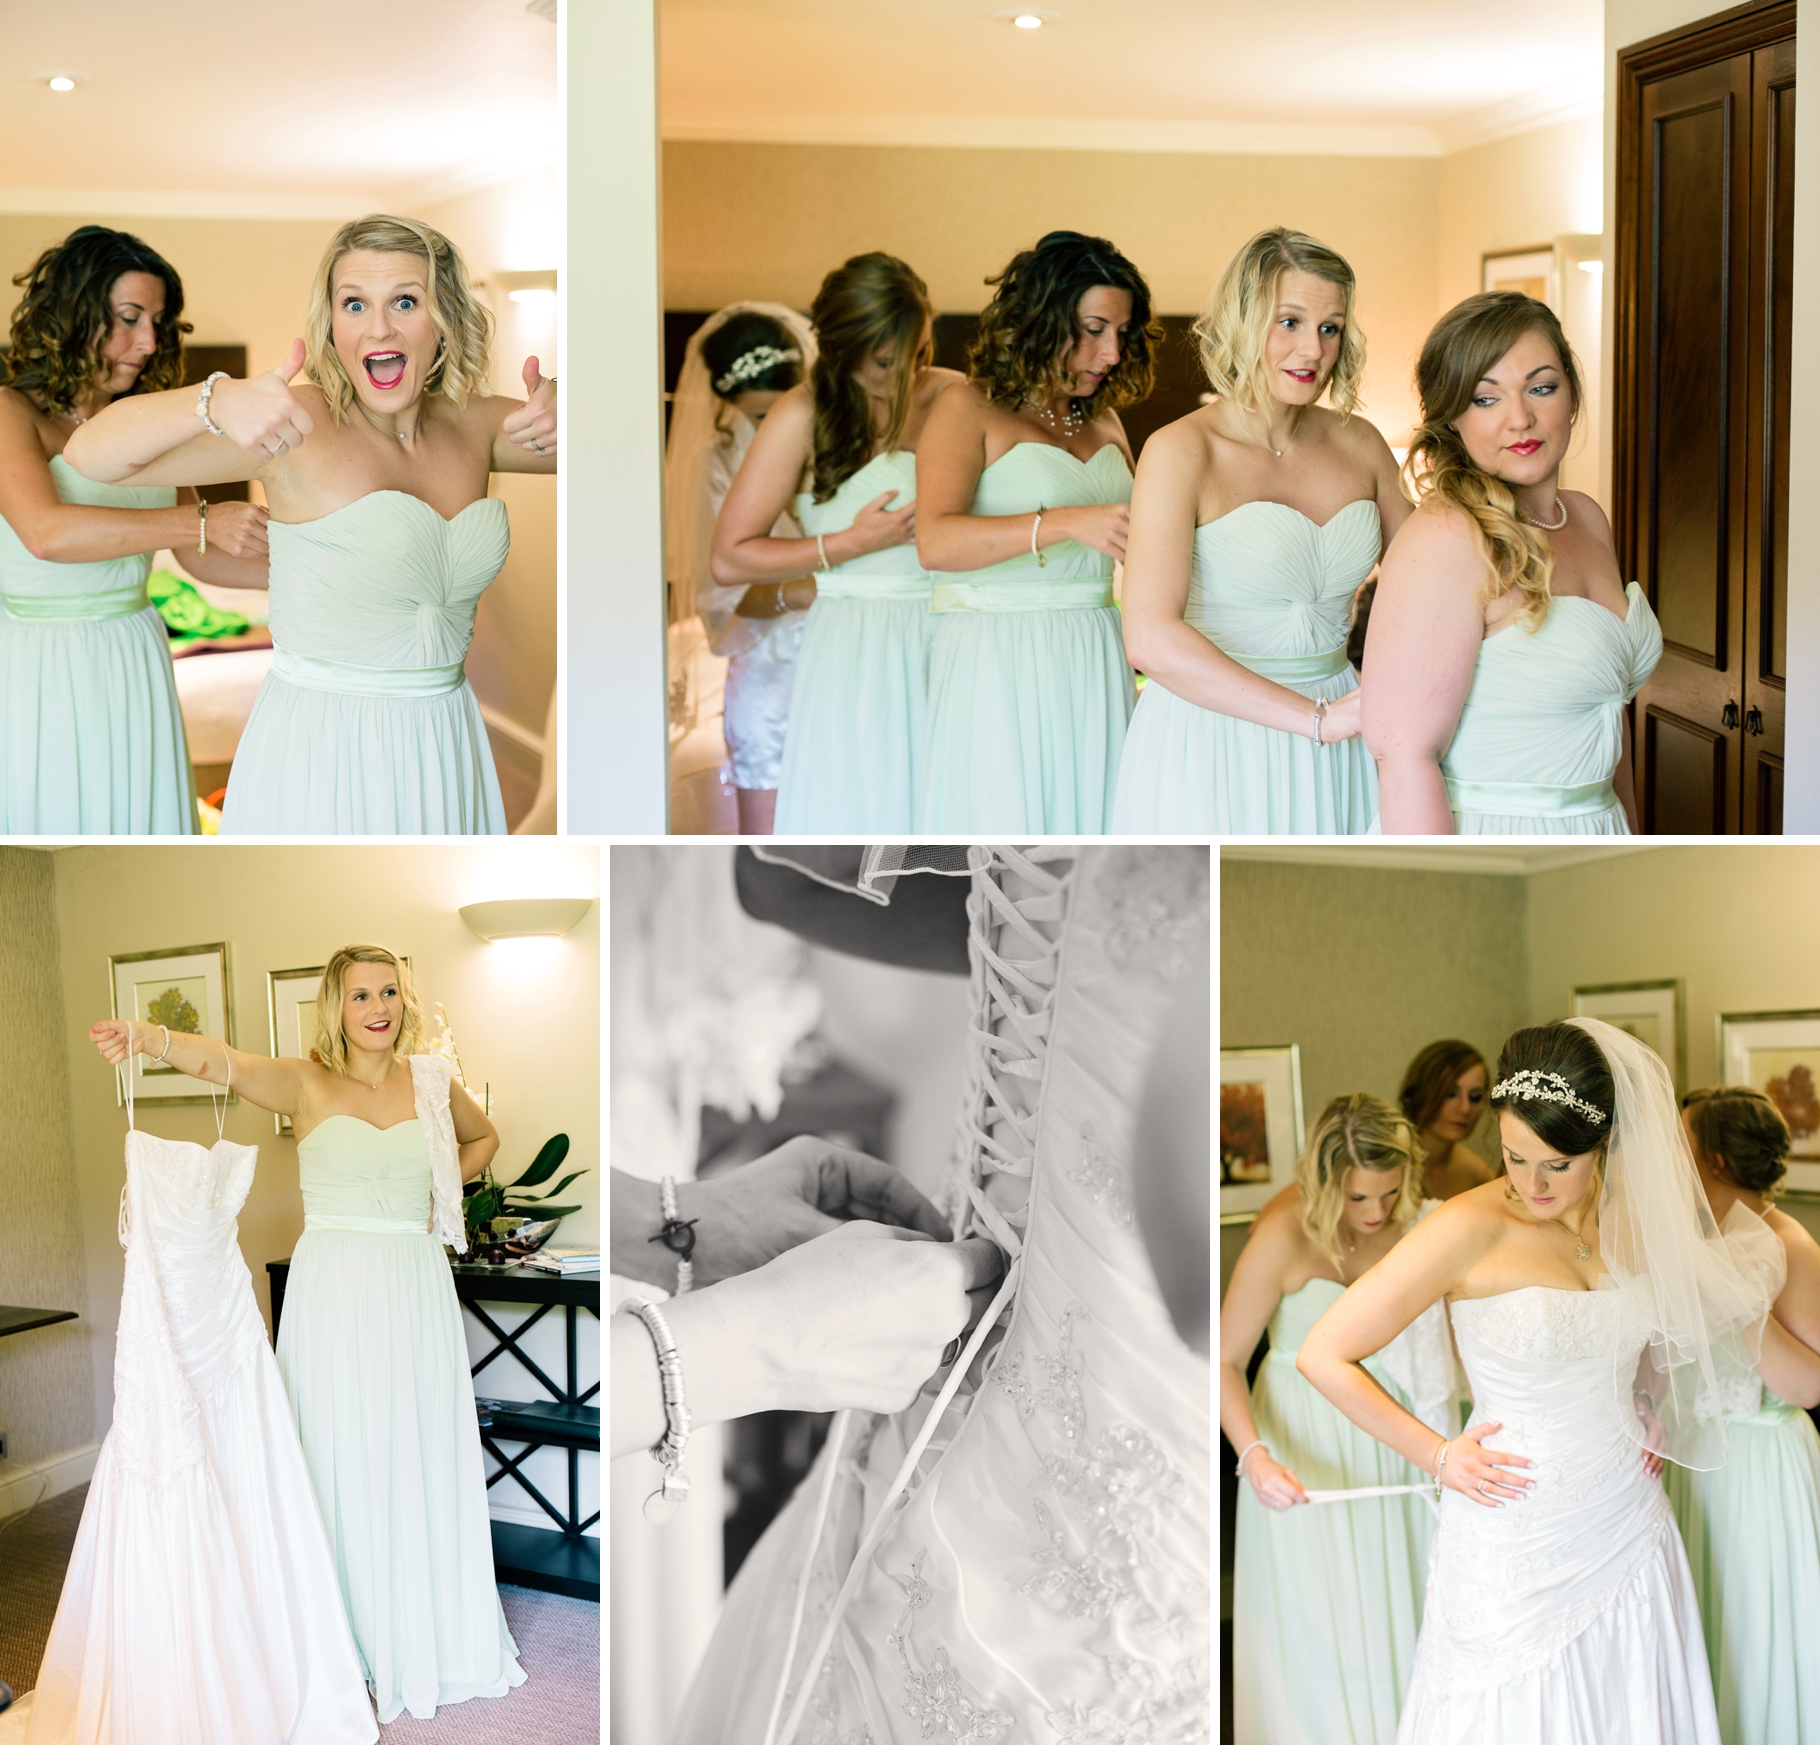 6-Getting-Ready-Bridesmaids-Dresses-Bridal-Gown-Wedding-Dress-Bride-Photographer-England-Bristol-Wedding-Photography-by-Betty-Elaine